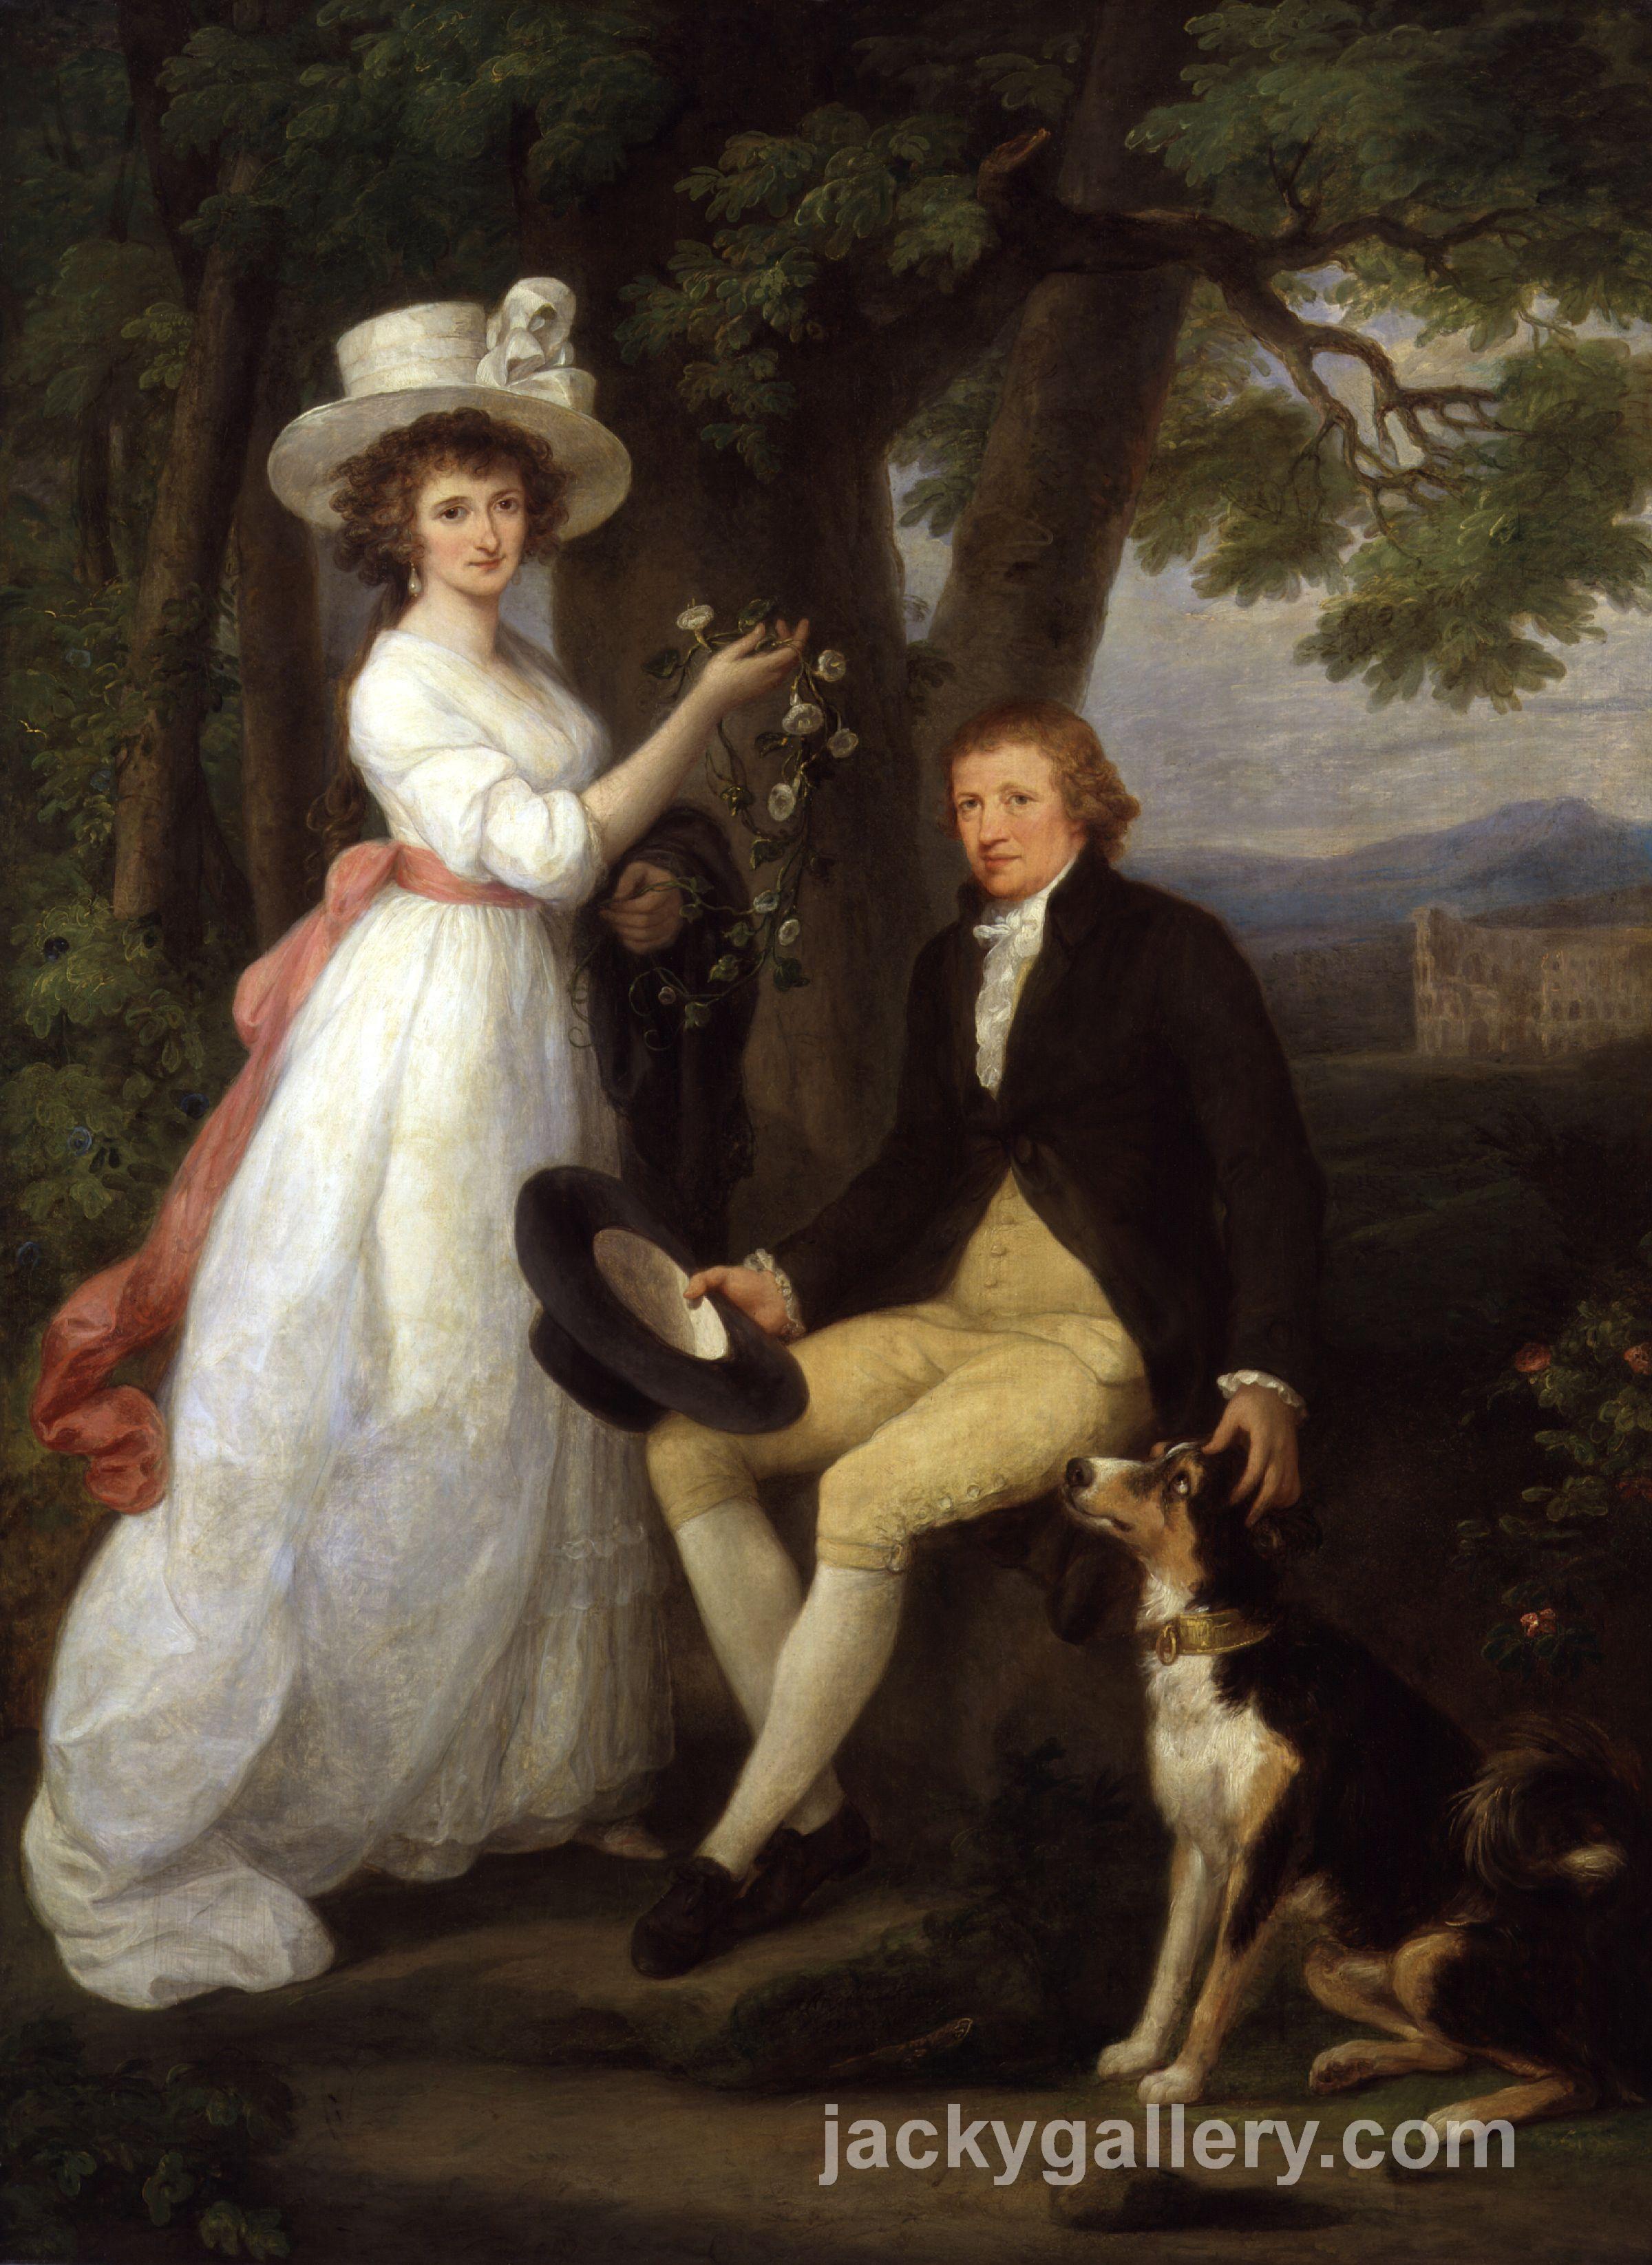 Anna Maria Jenkins and Thomas Jenkins, Angelica Kauffman painting